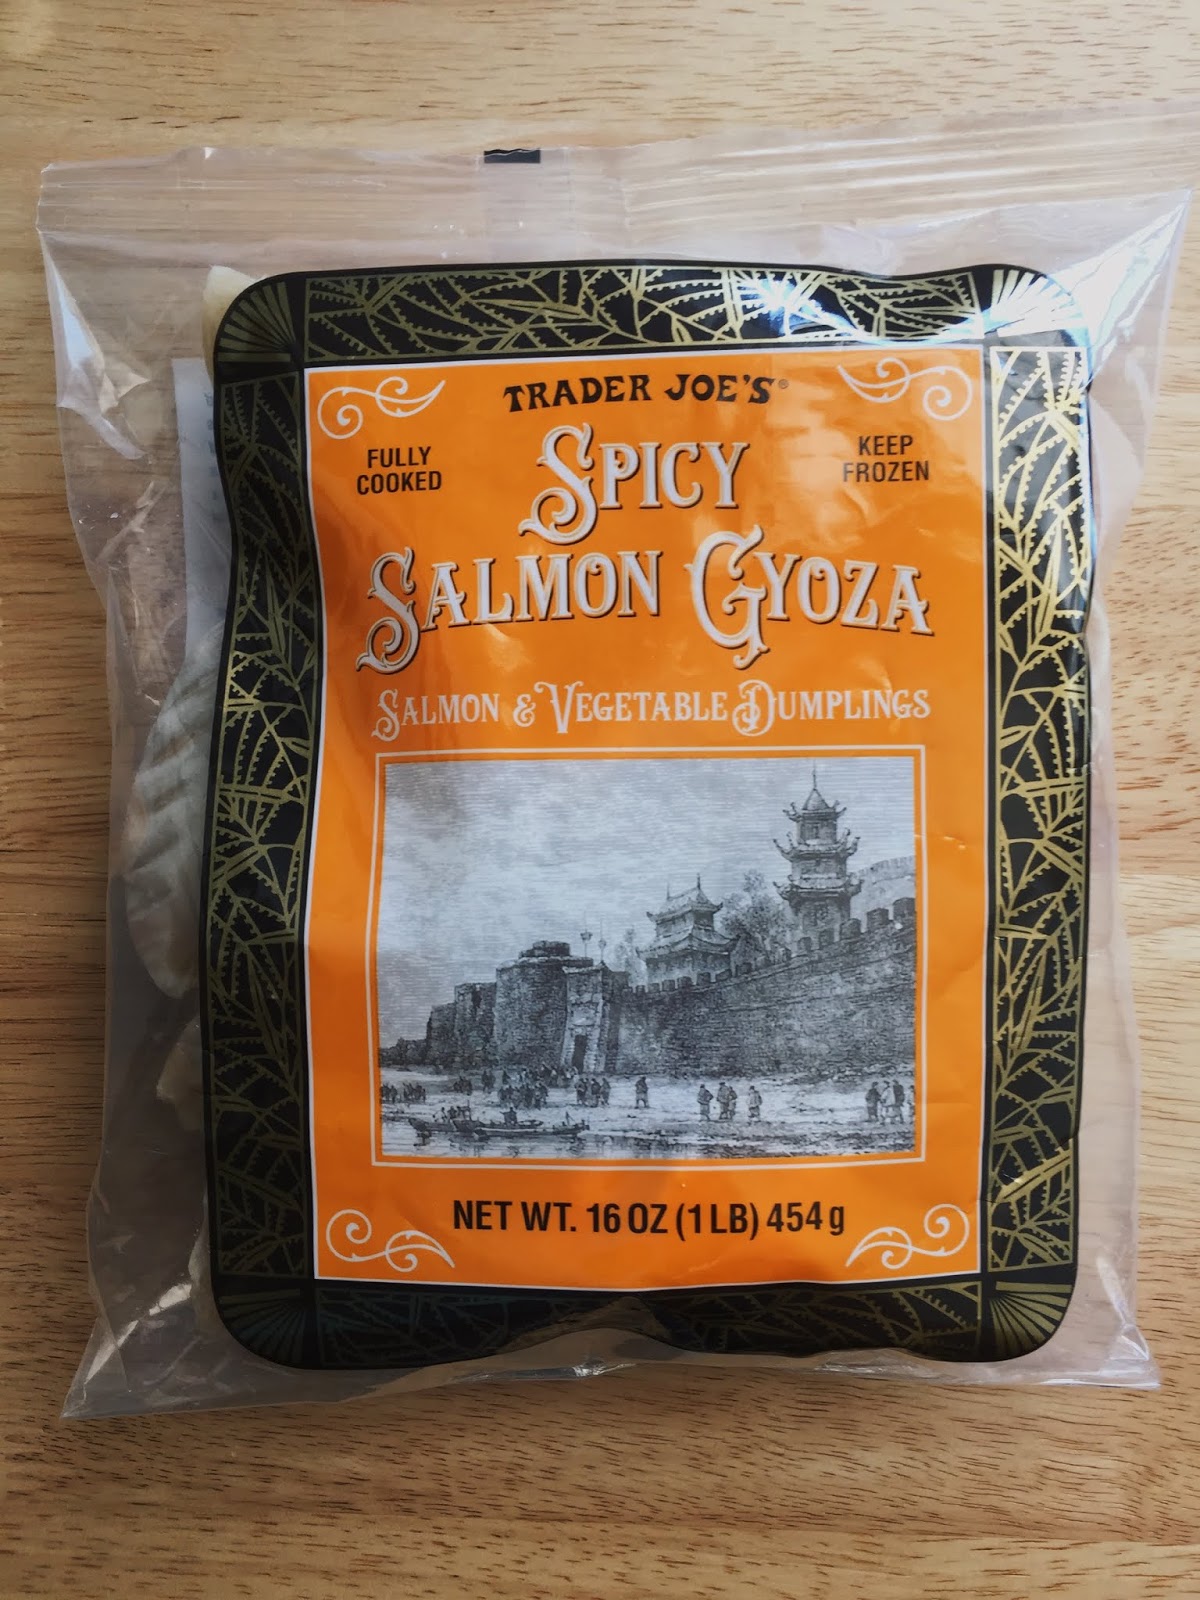 Trader Joe's Spicy Salmon Gyoza